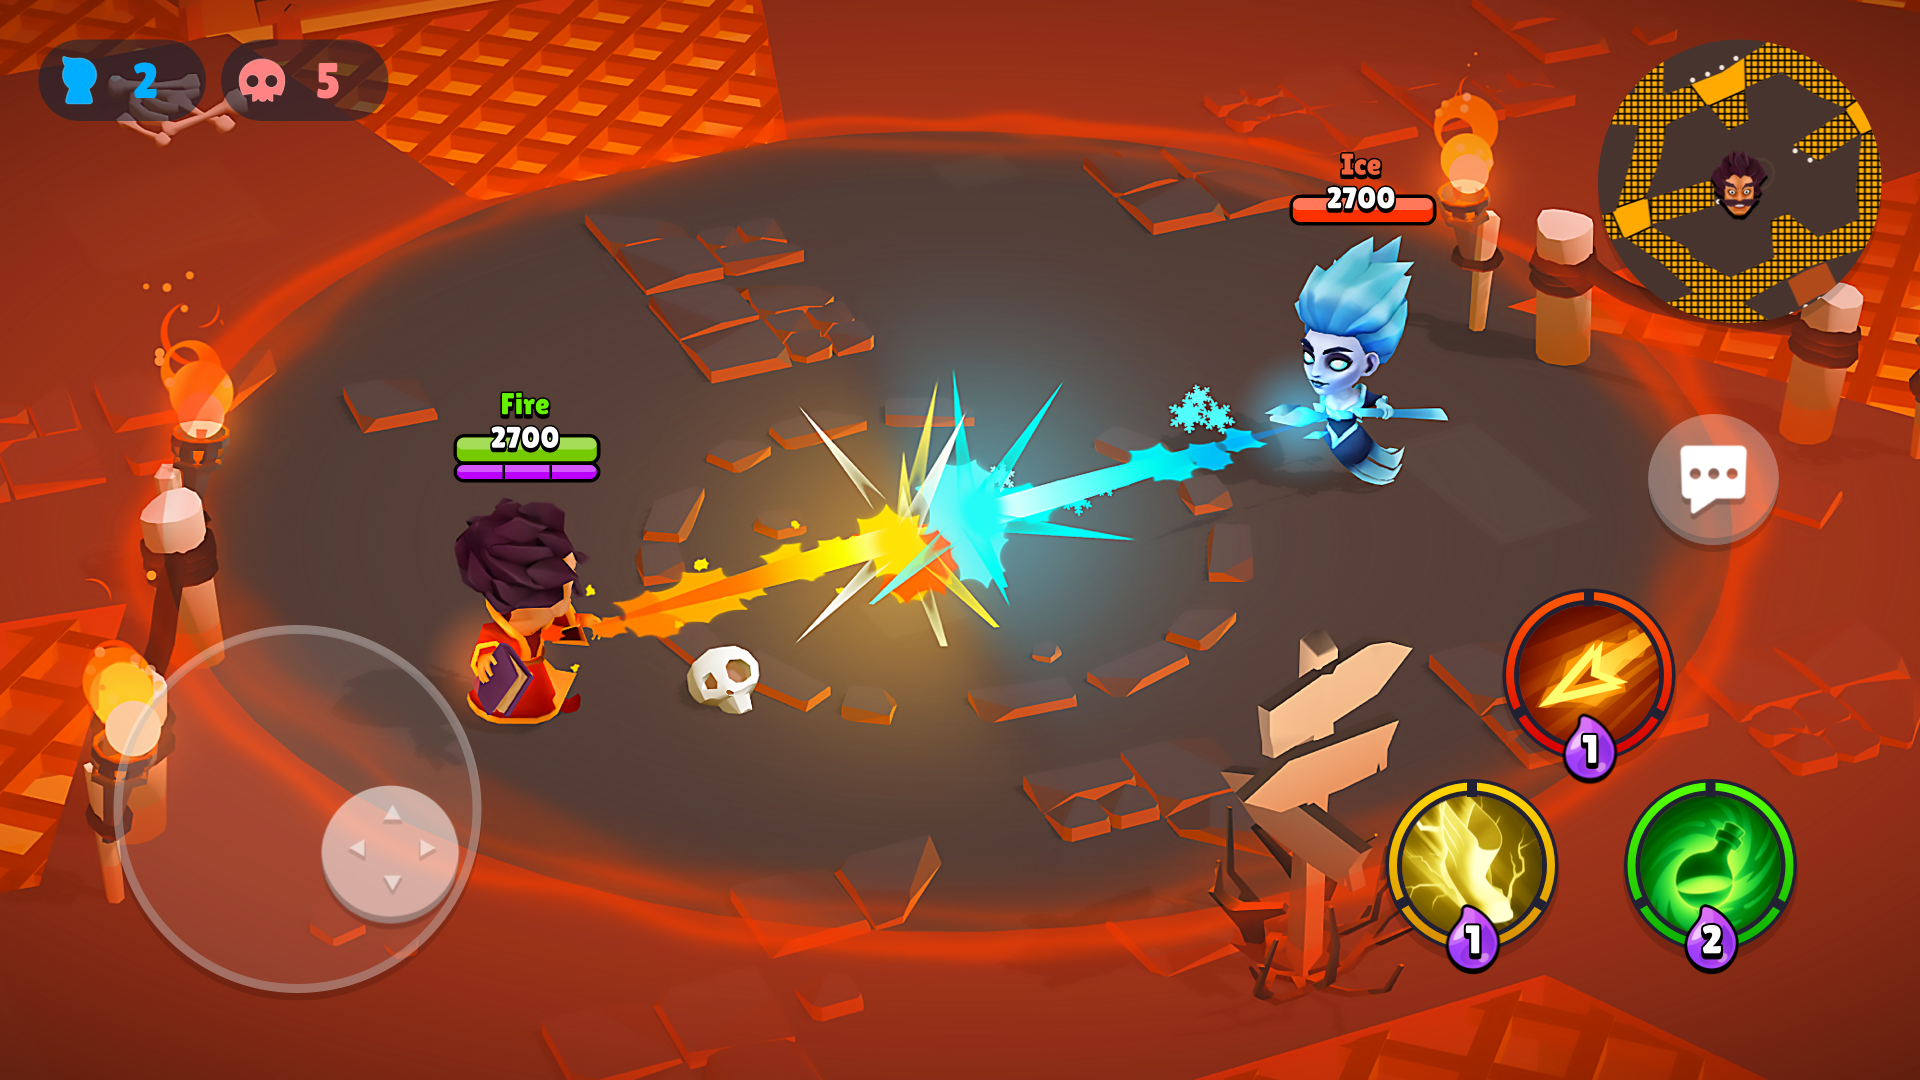 Screenshot of Spell Arena: Battle Royale